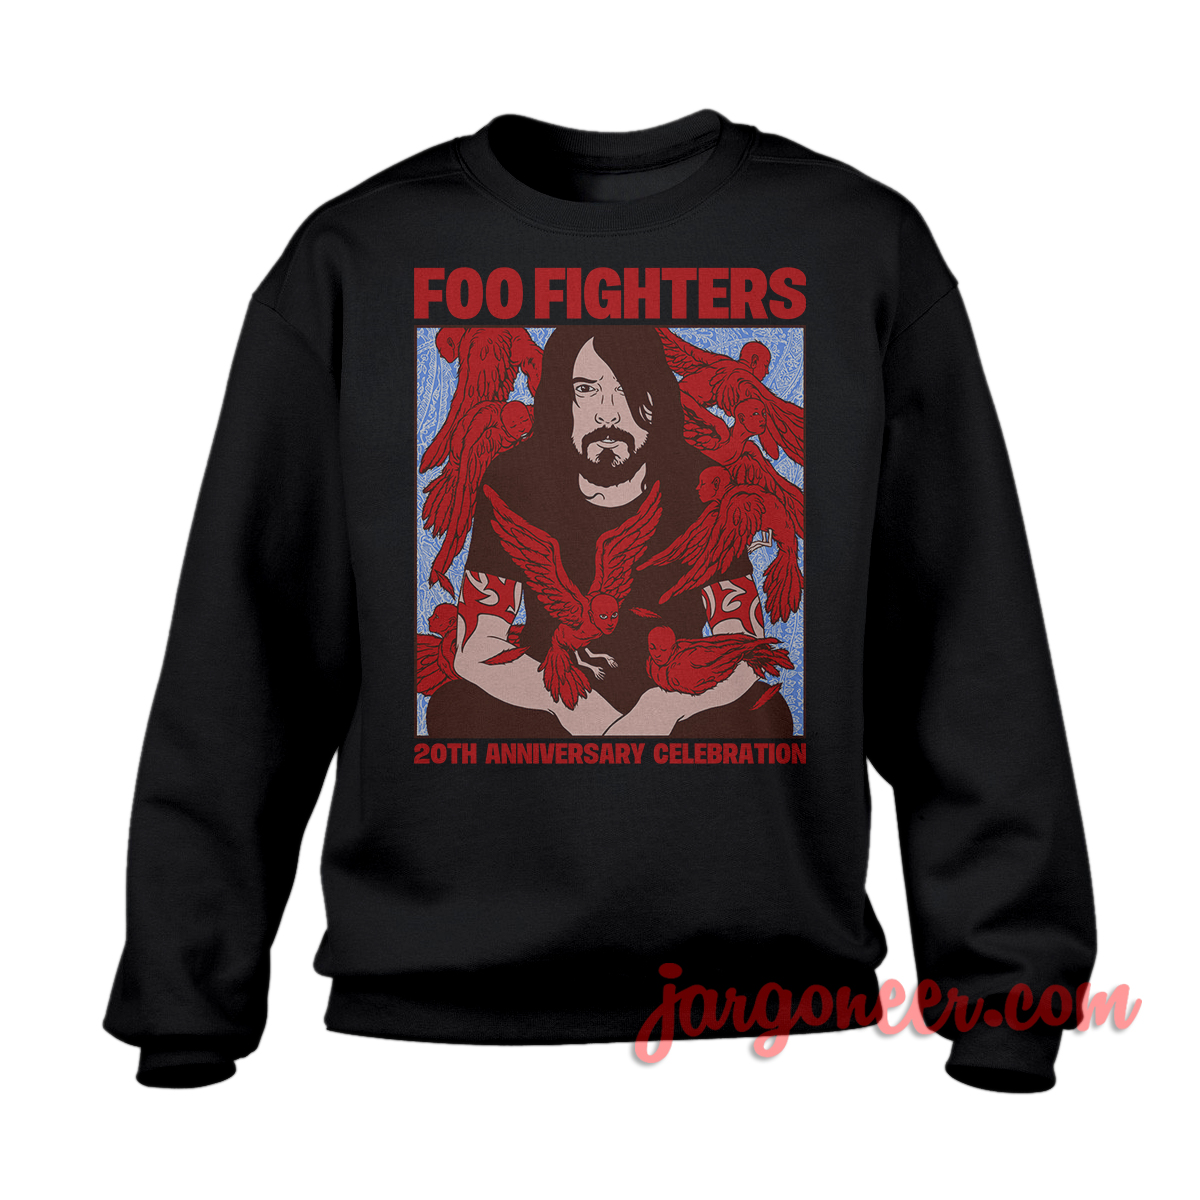 Foo Fighters 20th Anniversary Celebration Black SS - Shop Unique Graphic Cool Shirt Designs